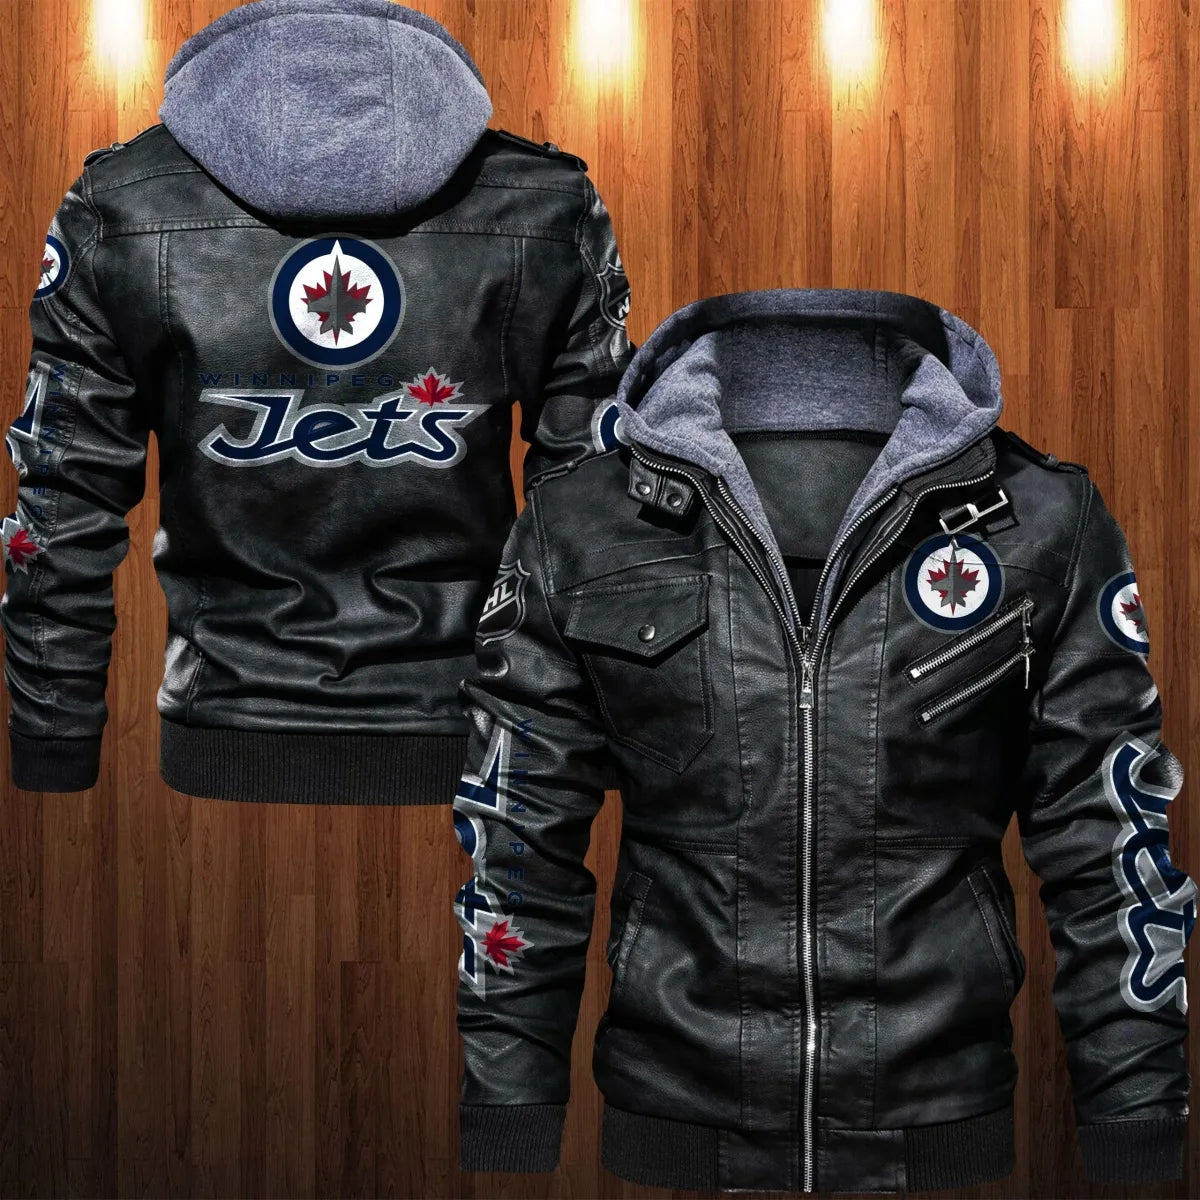 Winnipeg Jets Men's Full Zip Winter Jacket with Removable Hood